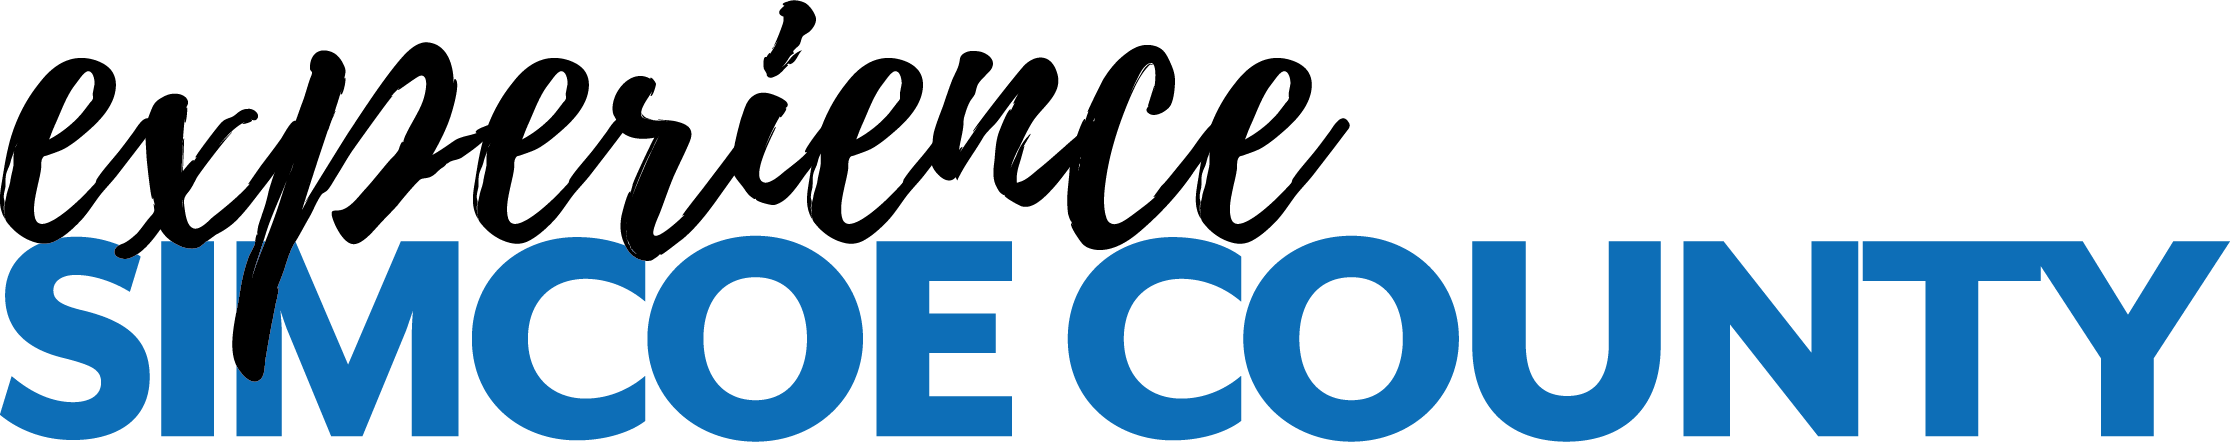 Tourism Simcoe County logo reading "Experience Simcoe County"